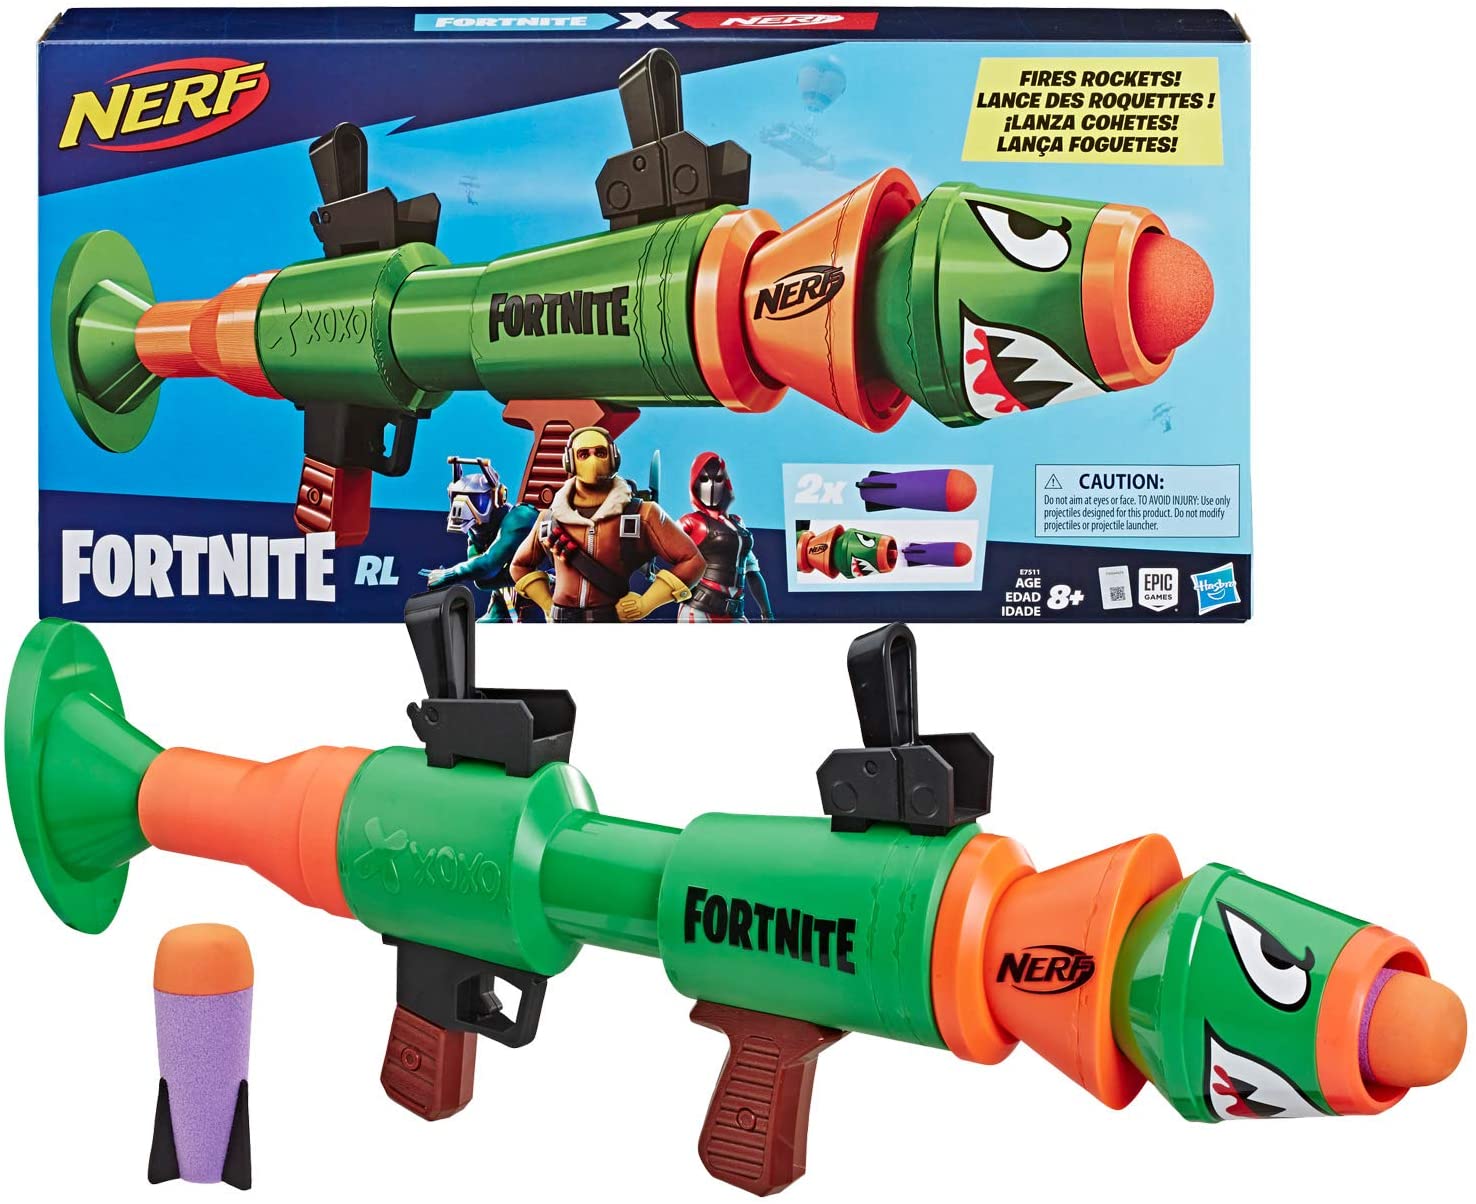 Amazon タイムセール祭り 銃型玩具 ナーフ シリーズの一部製品をセール対象に追加 Hobby Watch